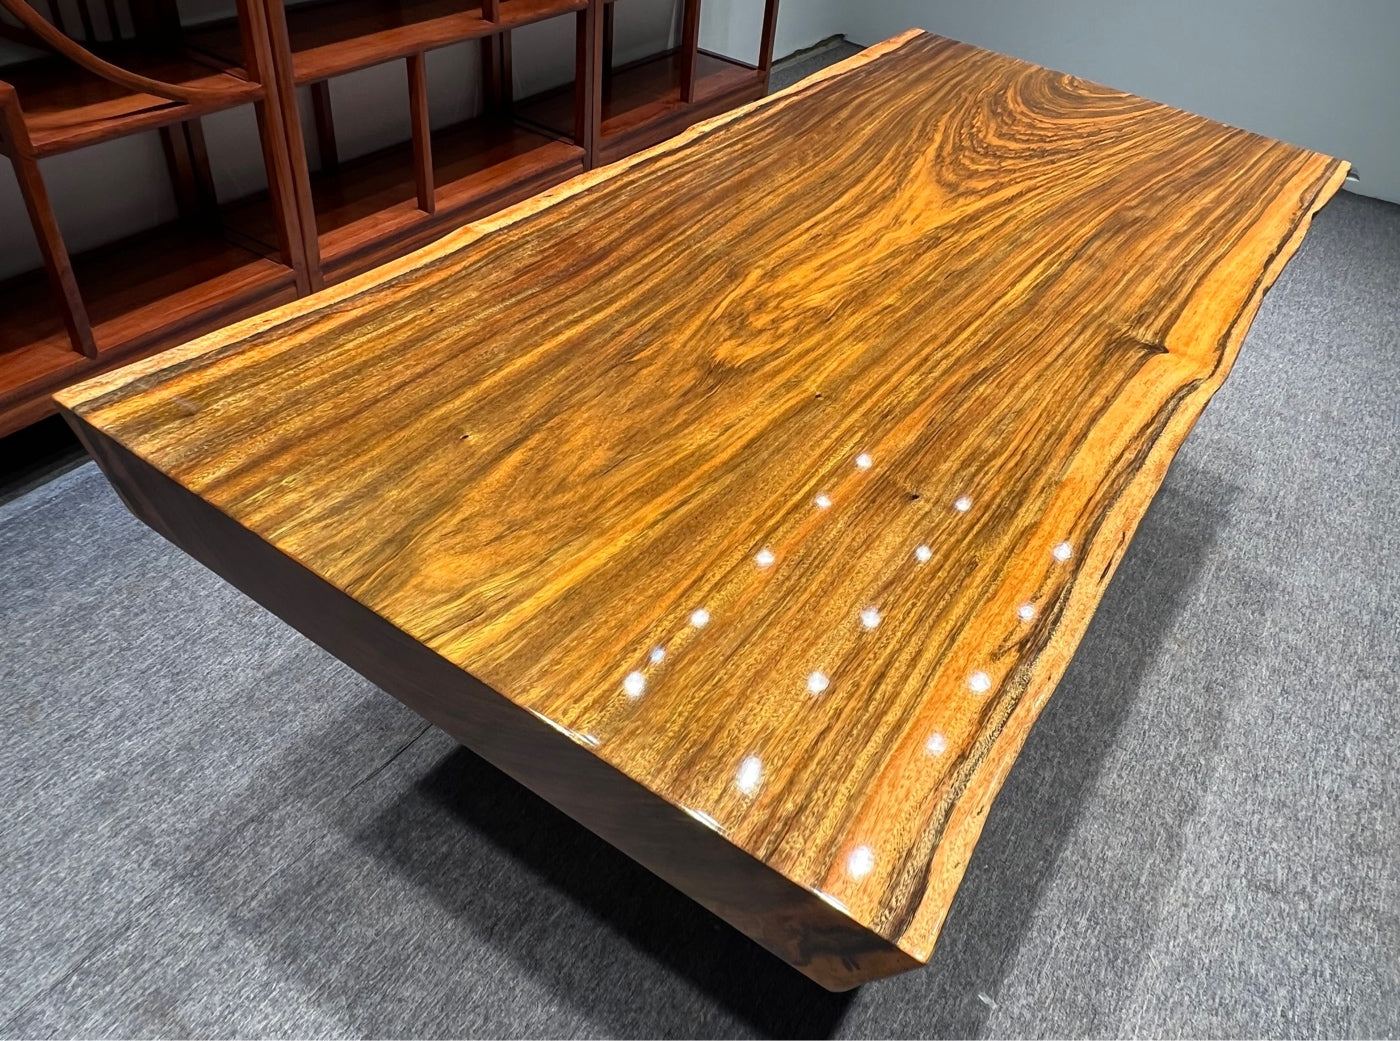 <tc>Tali wood</tc> tavolo lastra di legno, tavolo lastra di legno Africa rotondo, tavolo lastra canale c